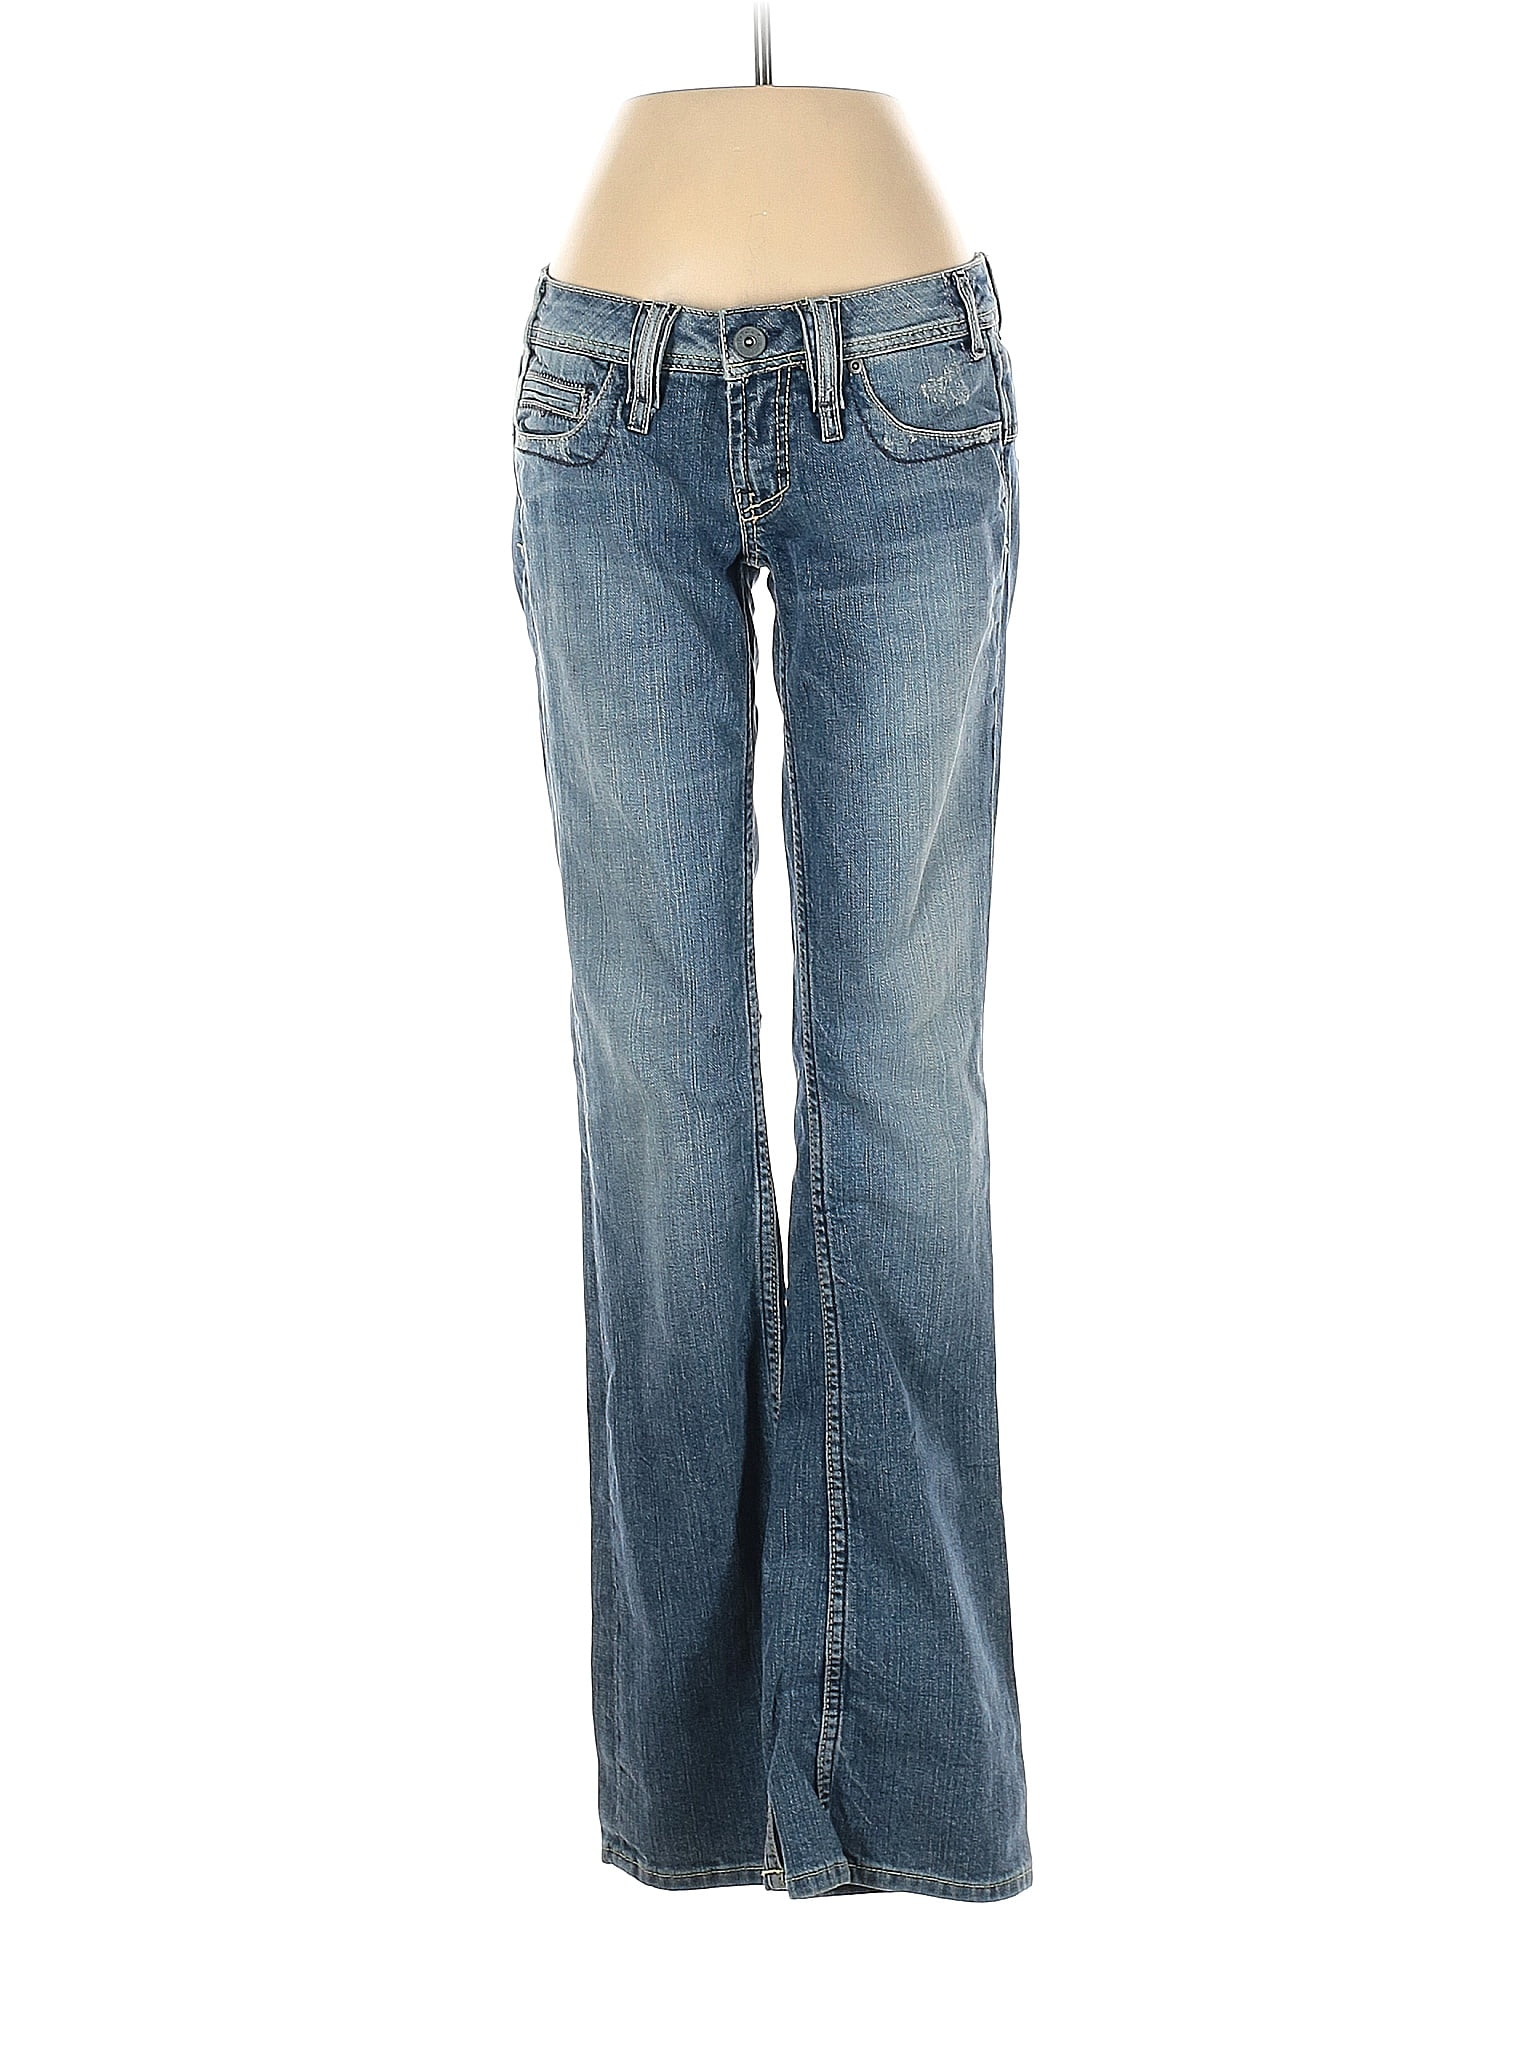 Yanuk Women's Jeans On Sale Up 90% Retail | thredUP